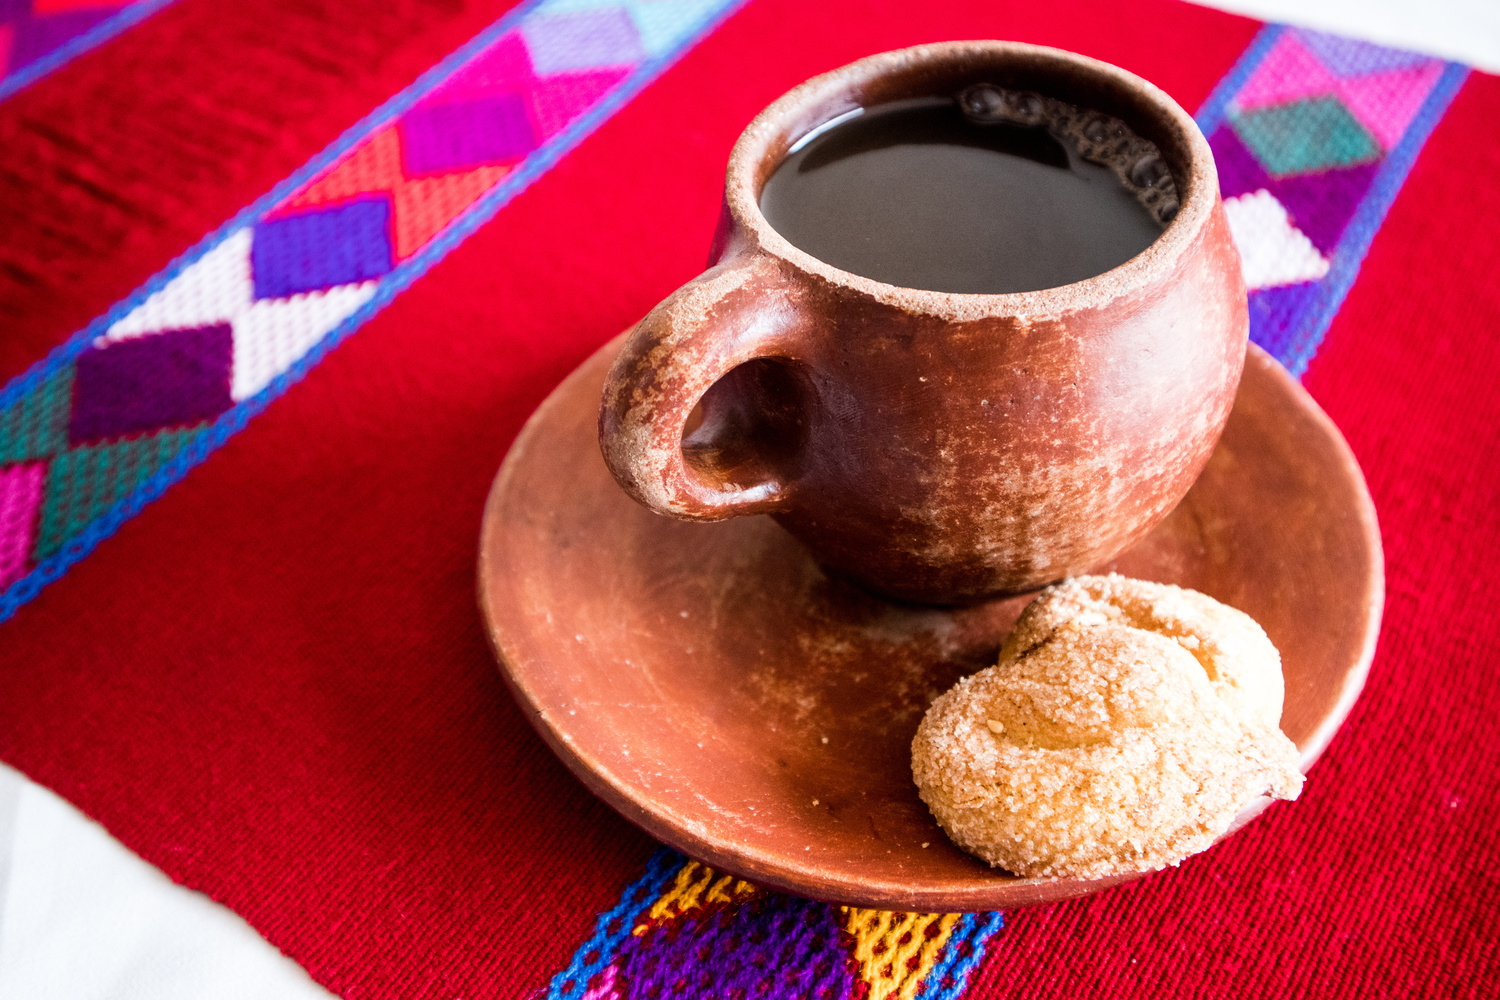 https://recipes.net/wp-content/uploads/2022/02/cafe-de-olla-mexican-coffee-recipe.jpg